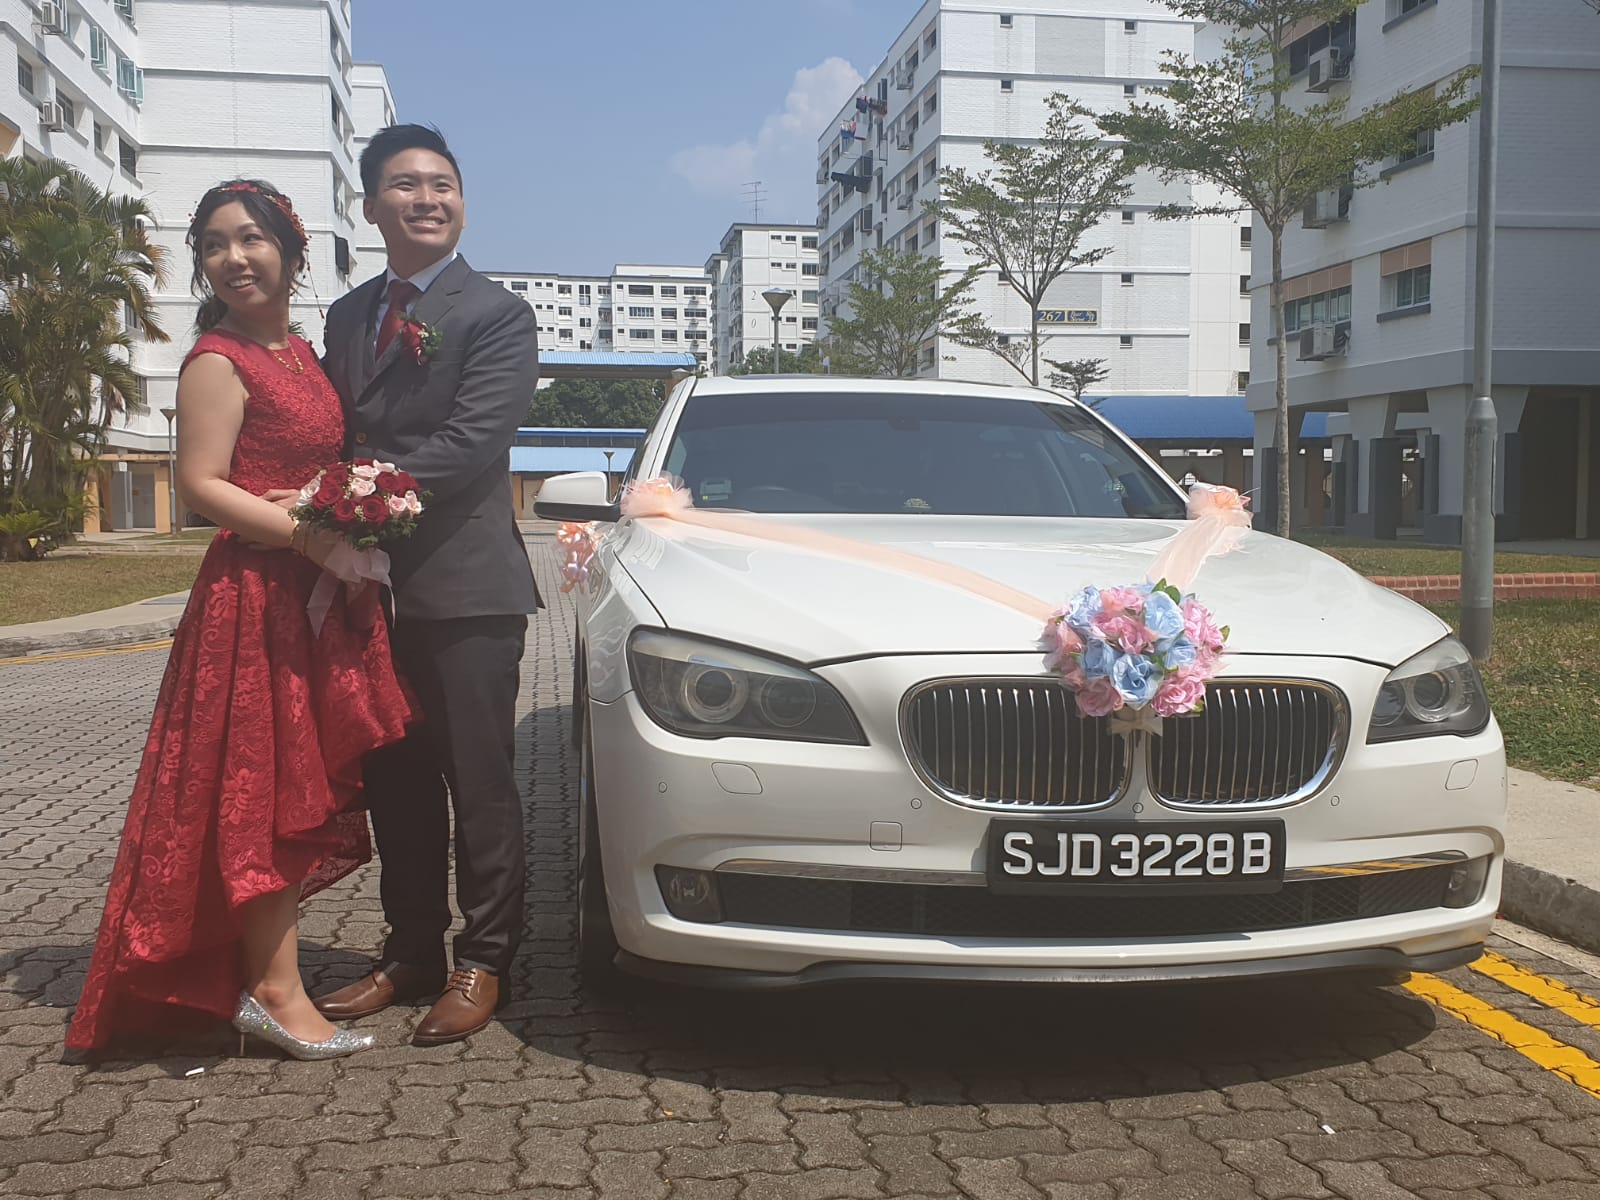 BMW 7 series wedding car couple